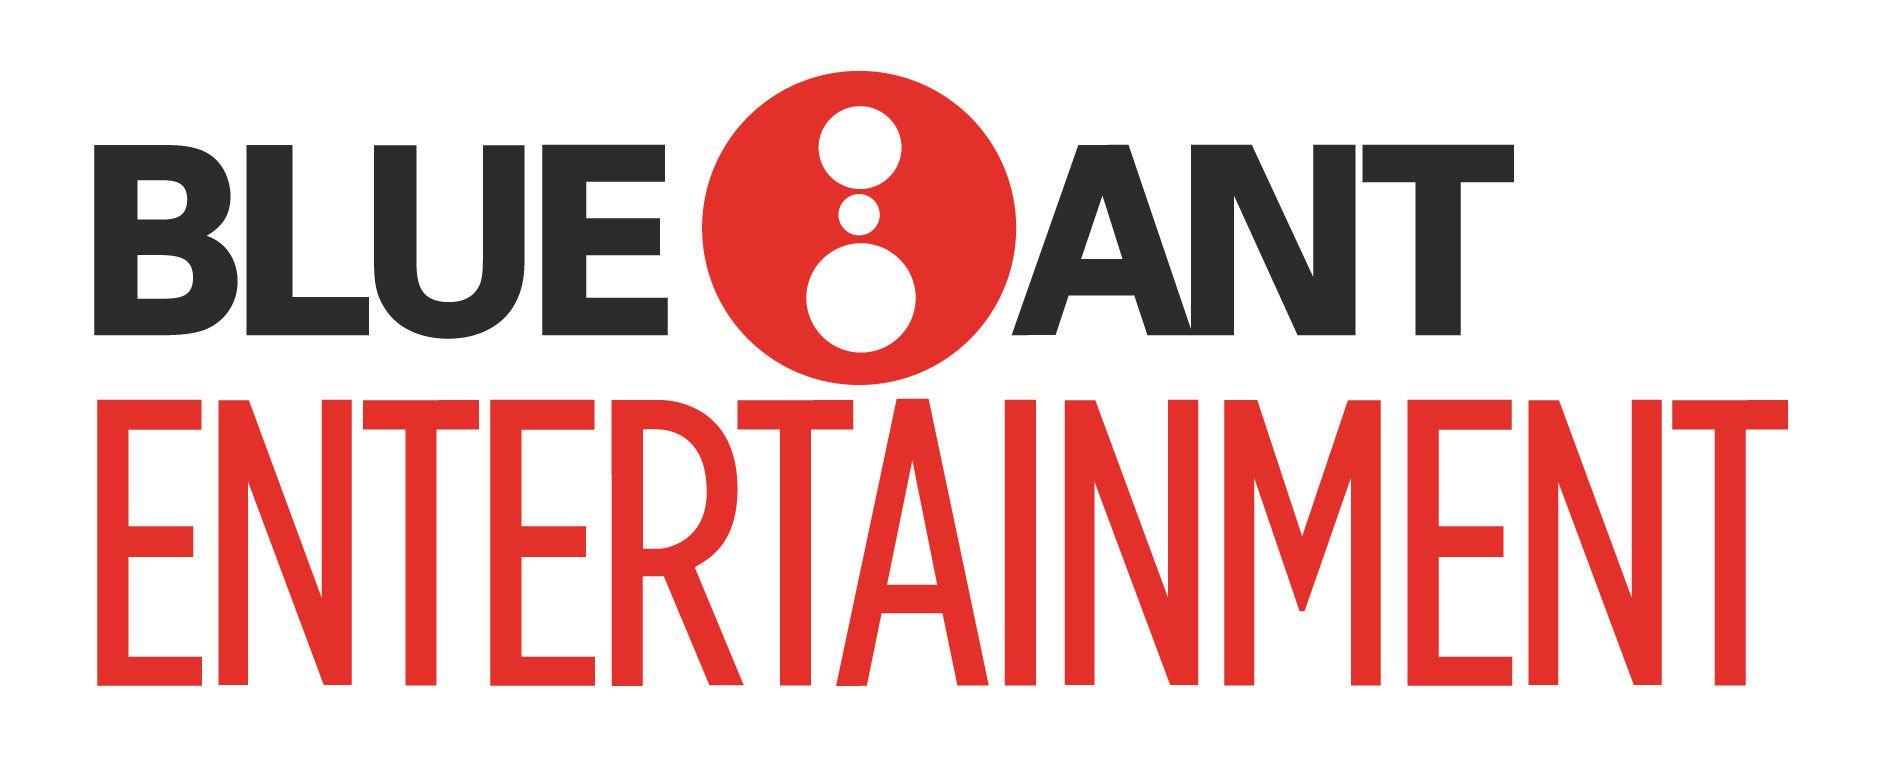 Blue Circle Entertainment Logo - Image - BLUE-ANT-ENTERTAINMENT-LOGO-BLK CMYK.jpg | Logopedia ...